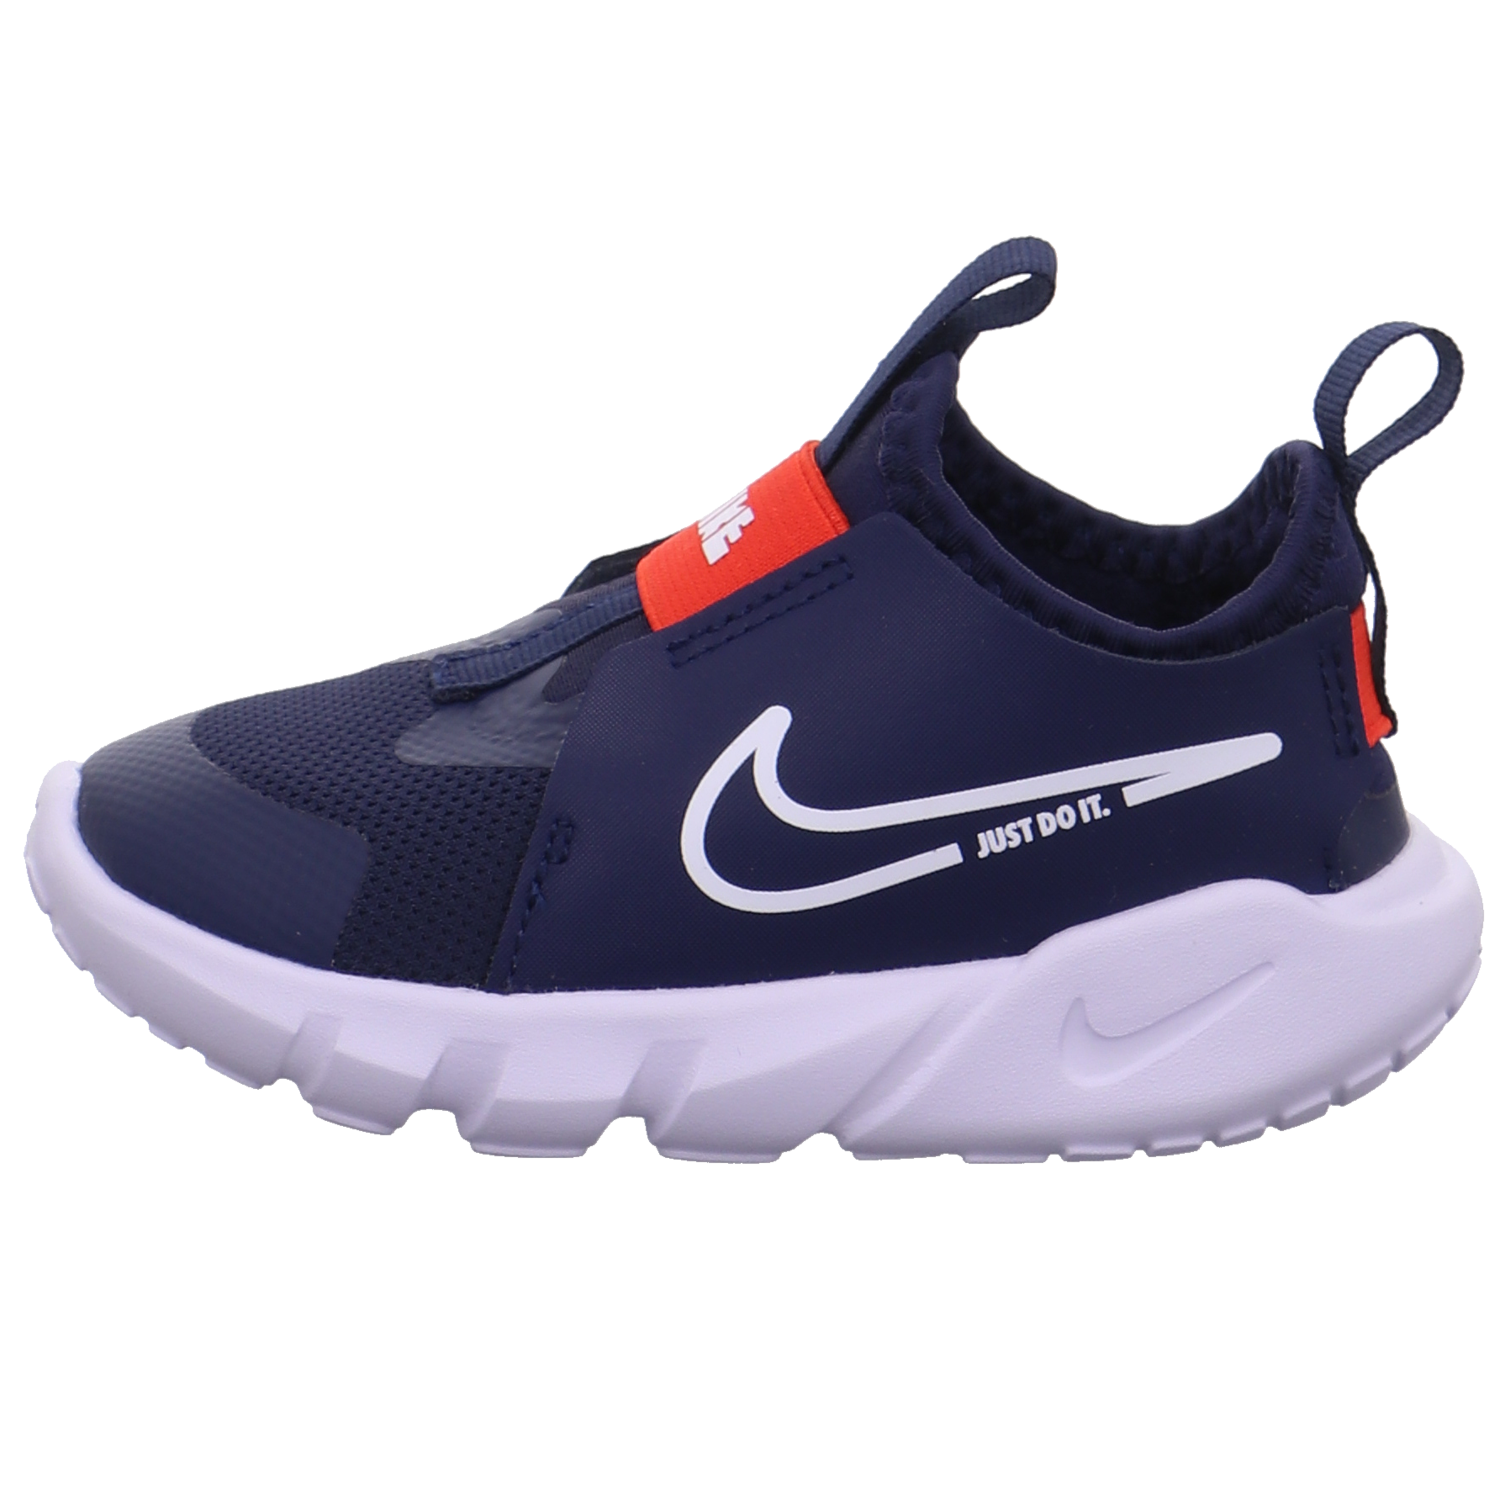 Nike Nike Flex Runner 2 Baby/Toddle blau kombi Bild1